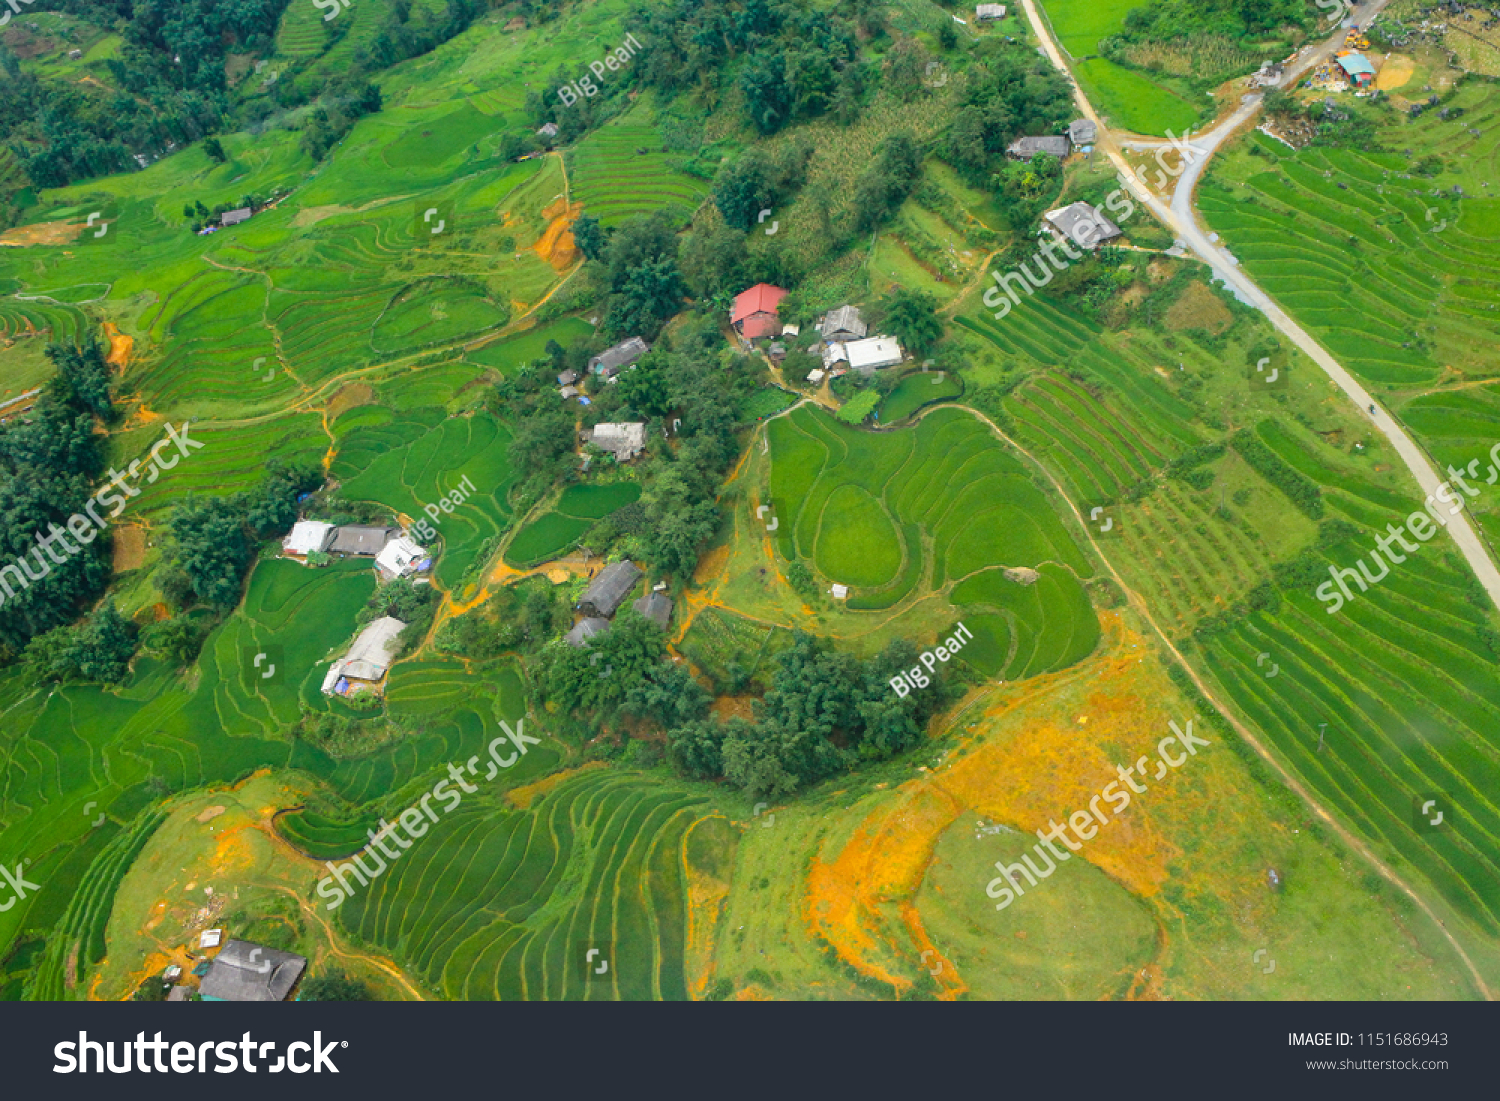 Terraced rice fields in harvest season, Muong Hoa Valley, Sappa, Northern Vietnam #1151686943